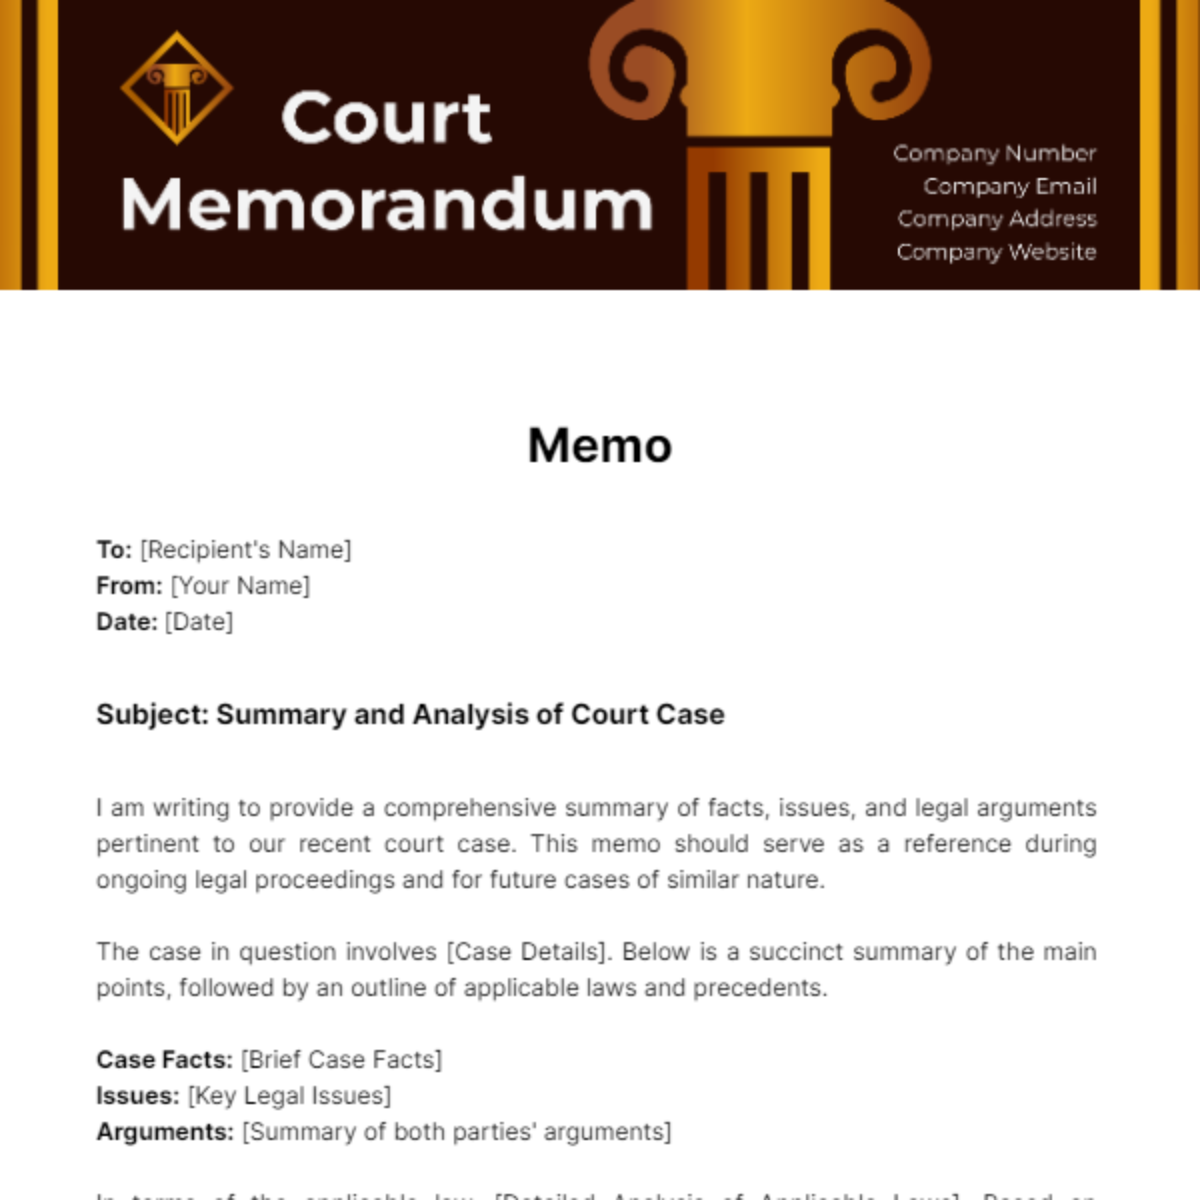 Court Memorandum